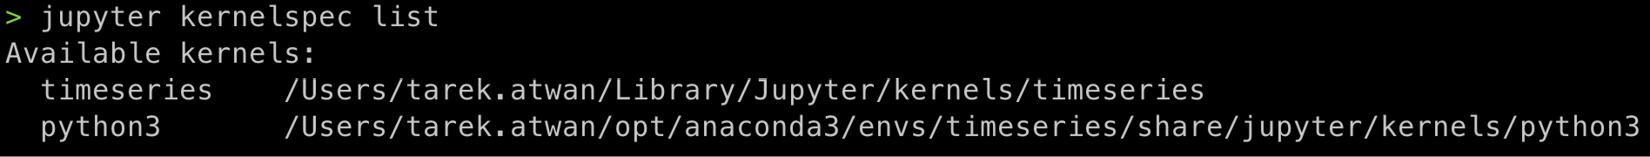 Figure 1.10 – List of kernels available for Jupyter
